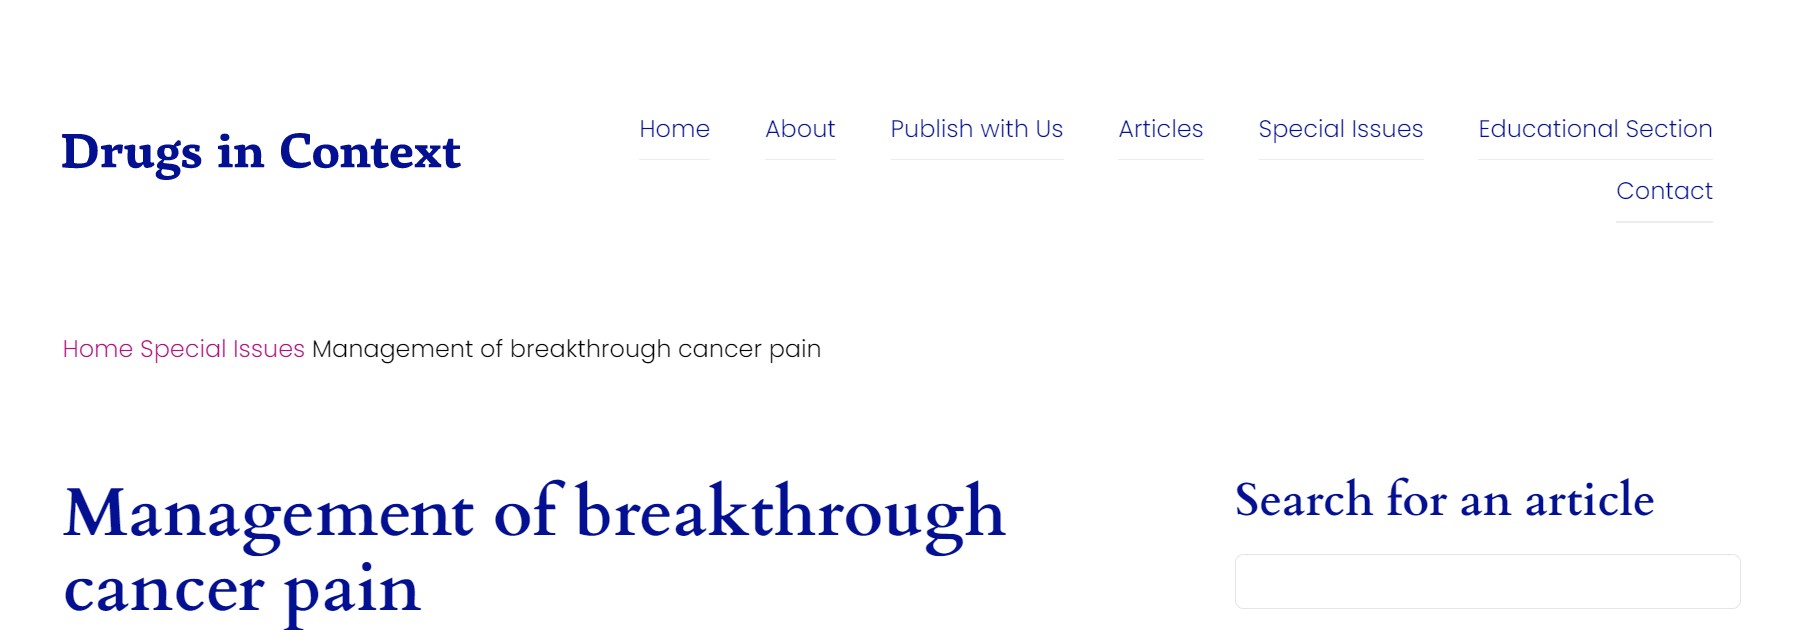 Management of breakthrough cancer pain